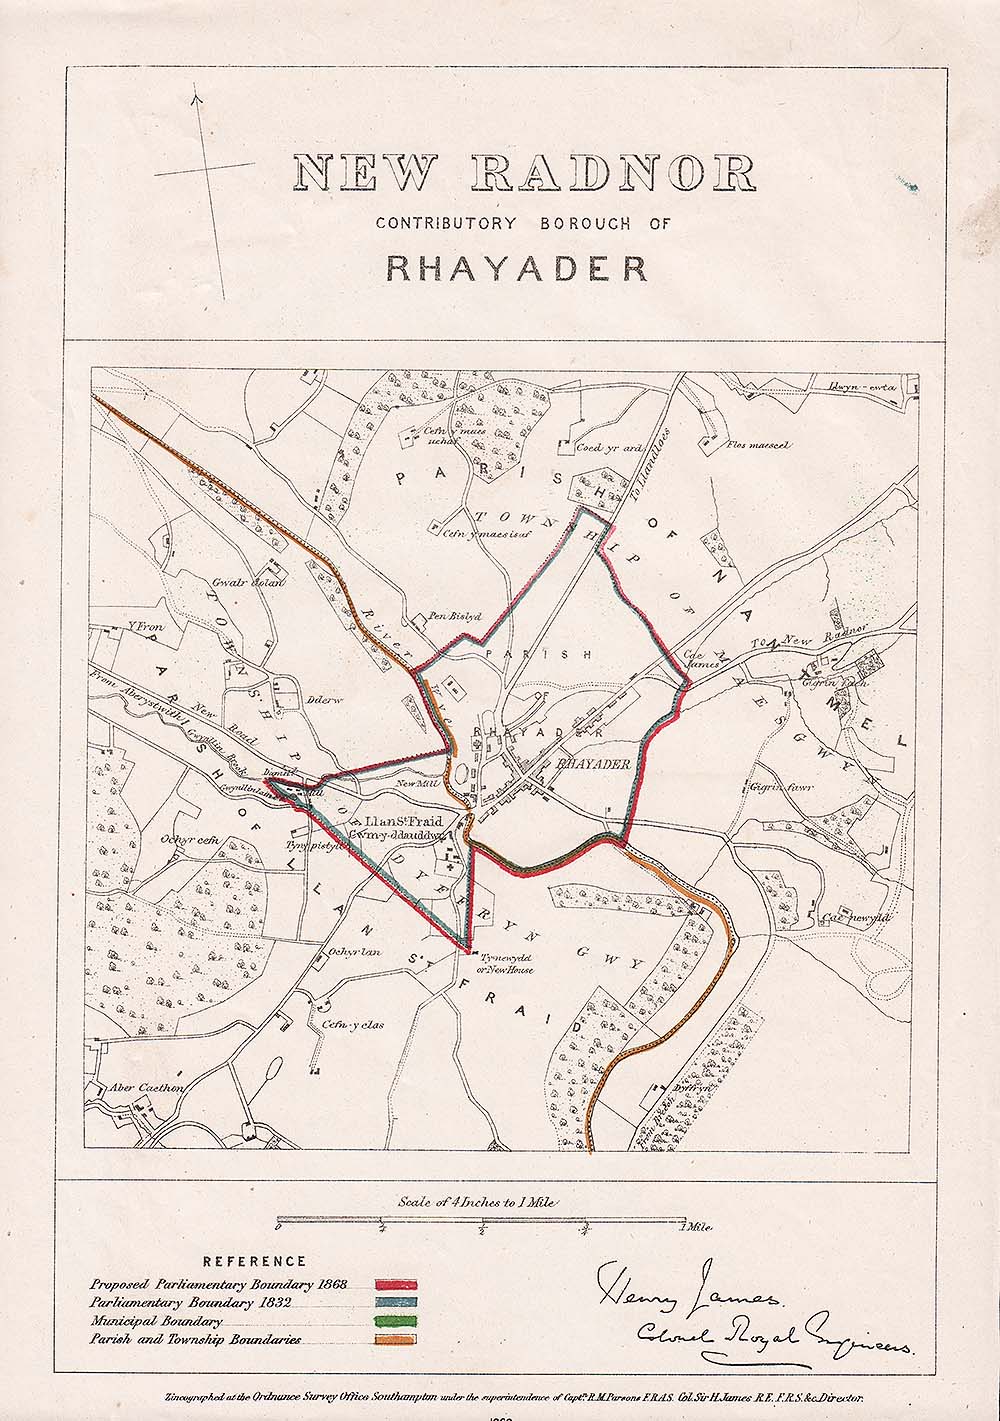 Contribuory Borough of Rhayader 